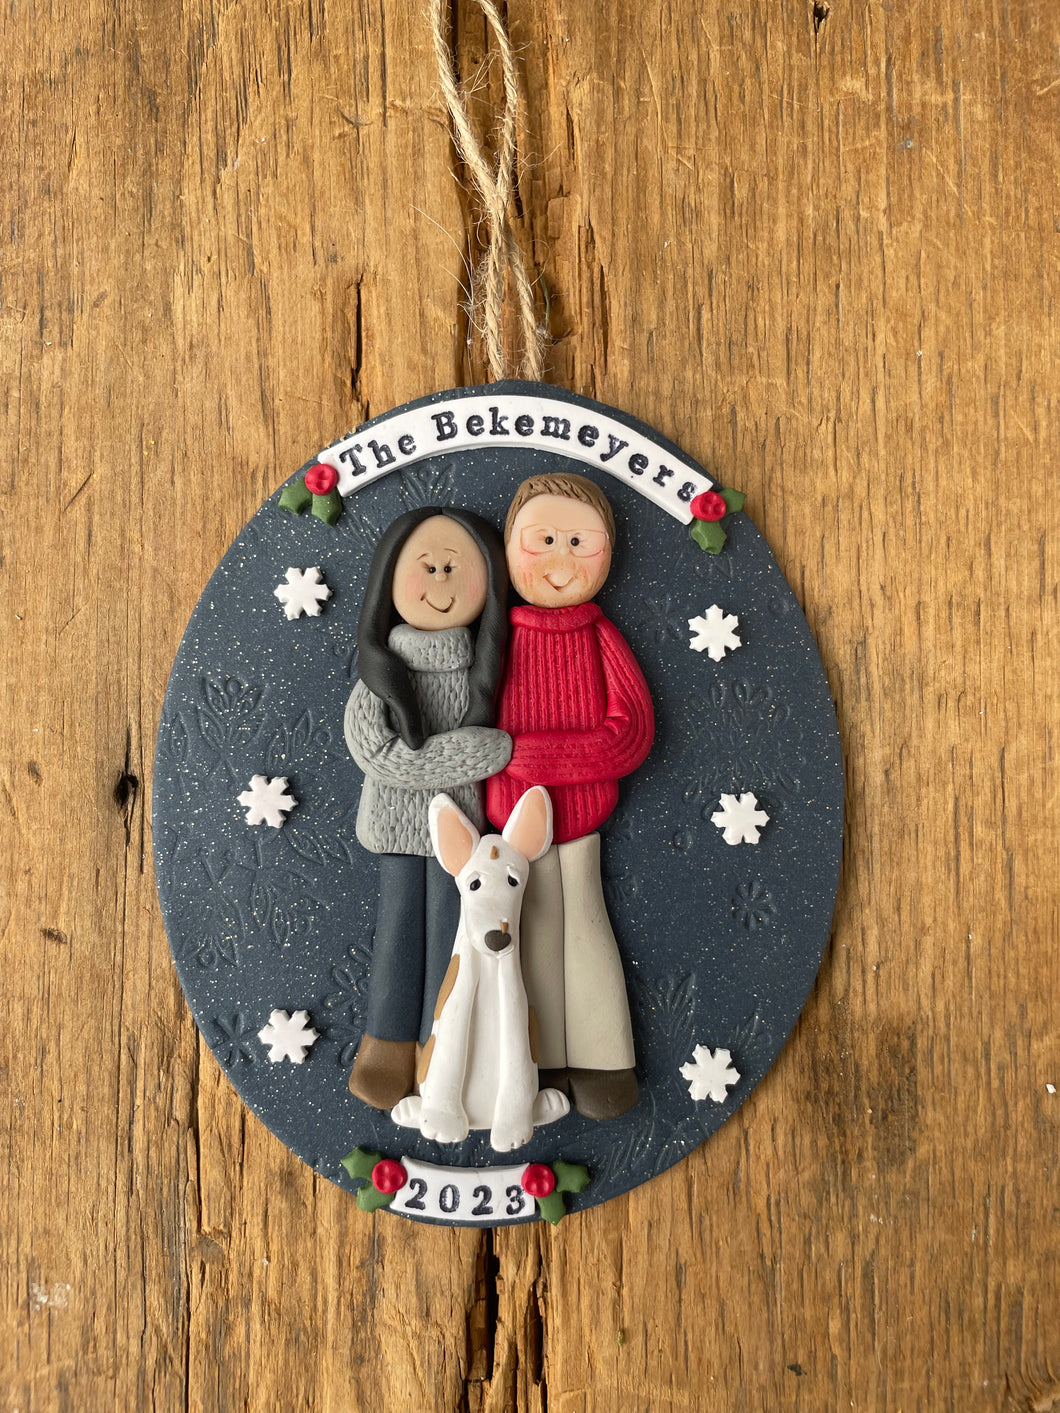 3 Member custom clay family portrait Christmas ornament